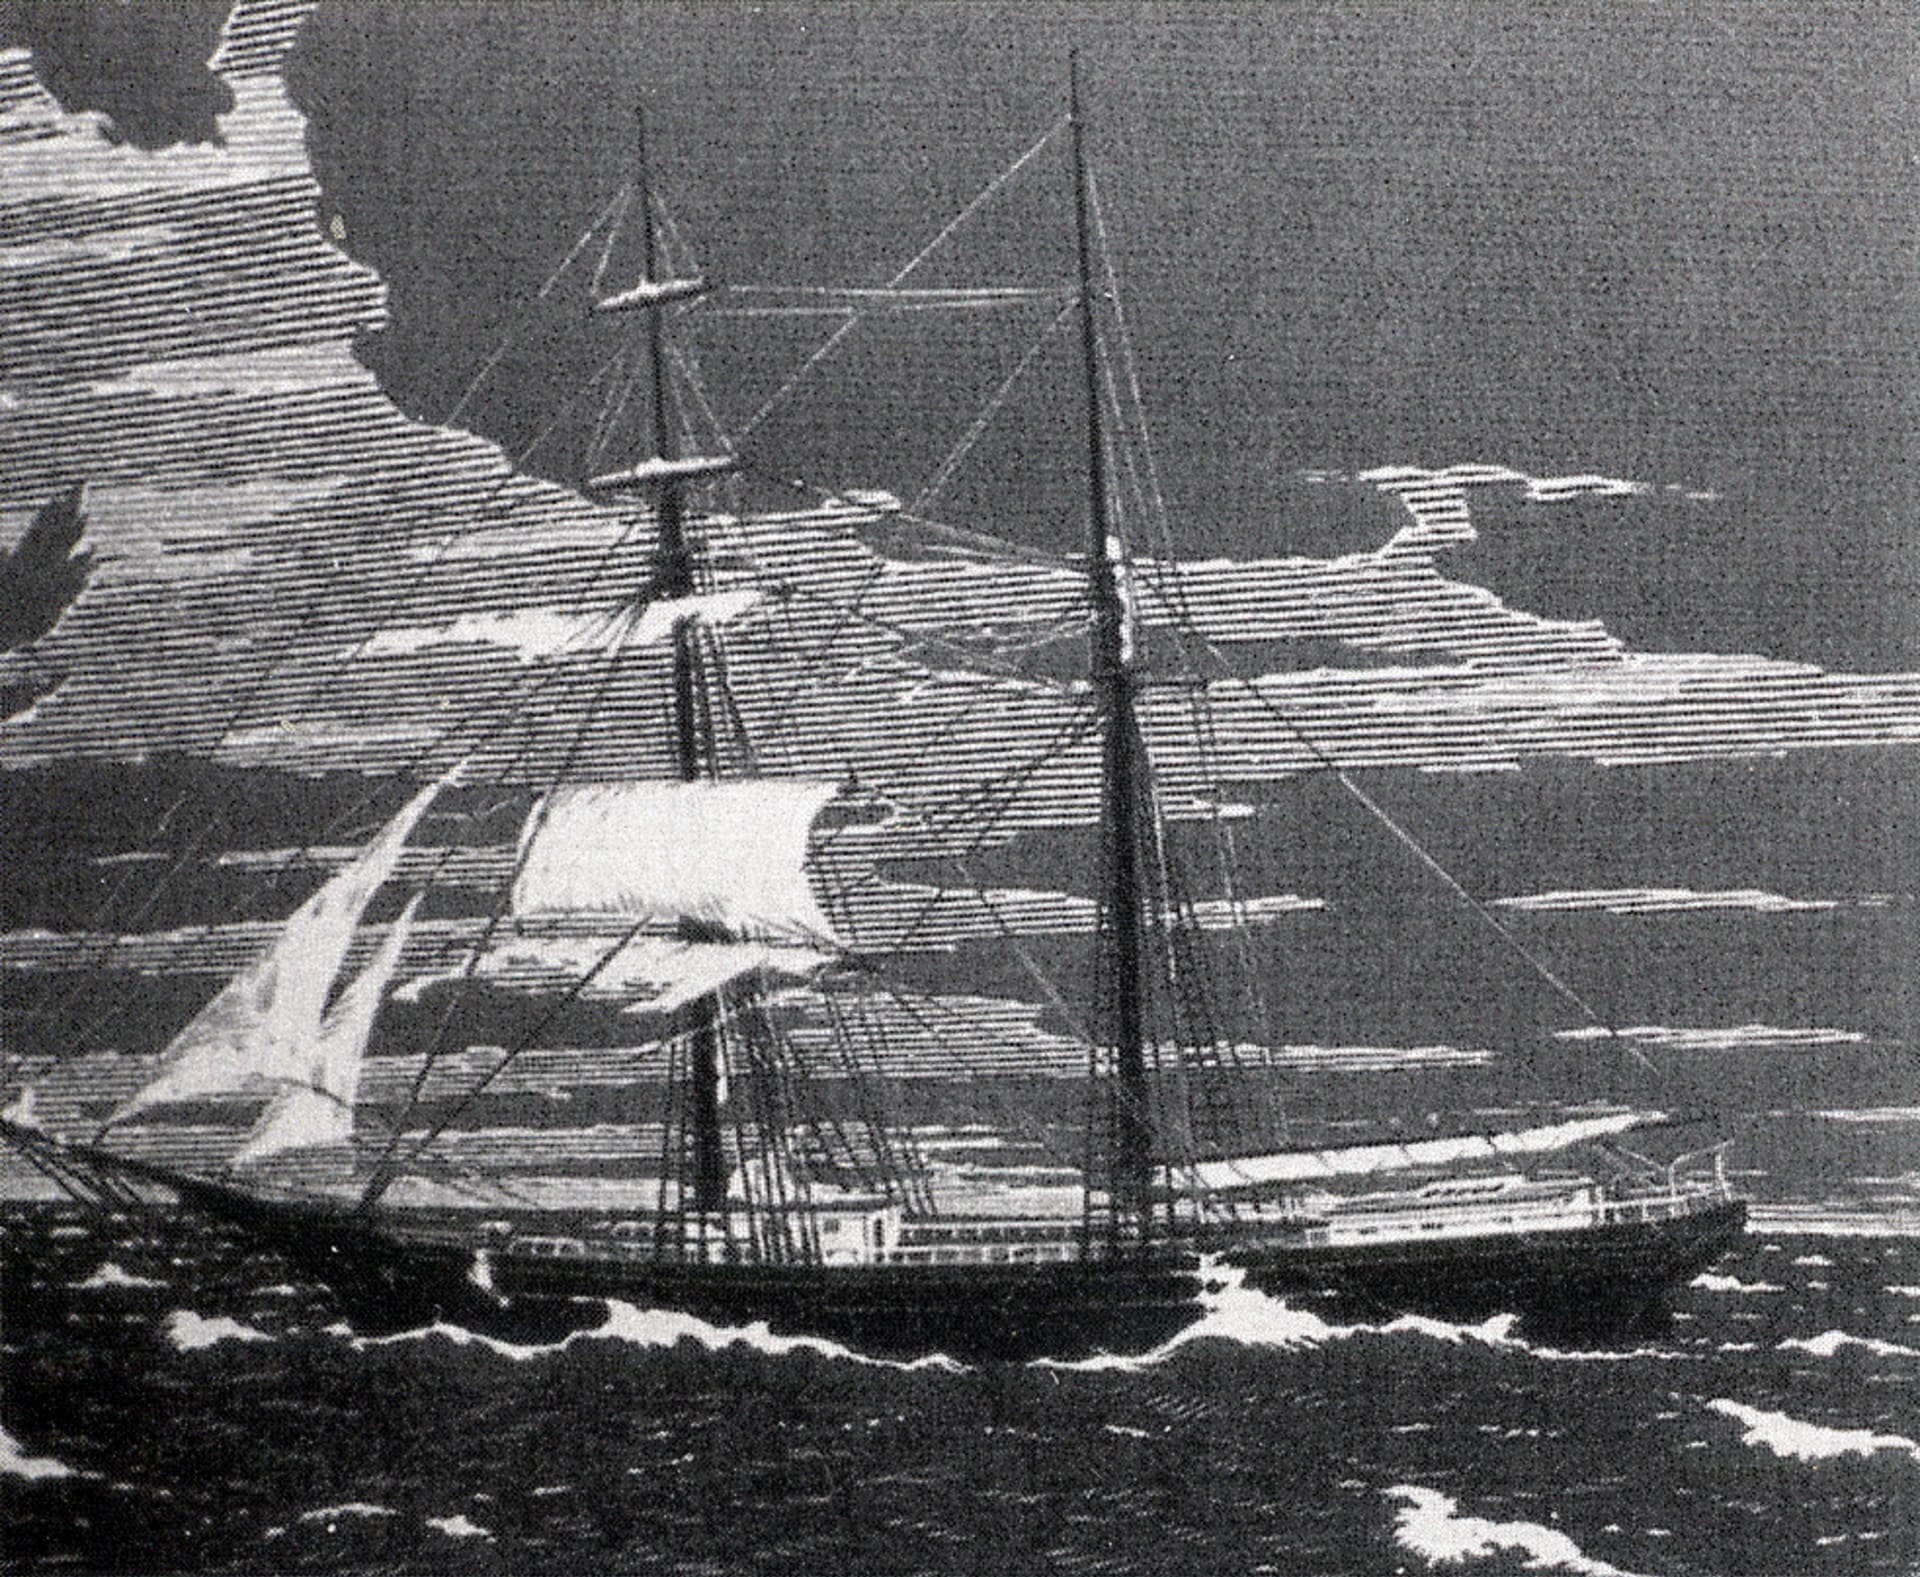 Brigantina Mary Celeste